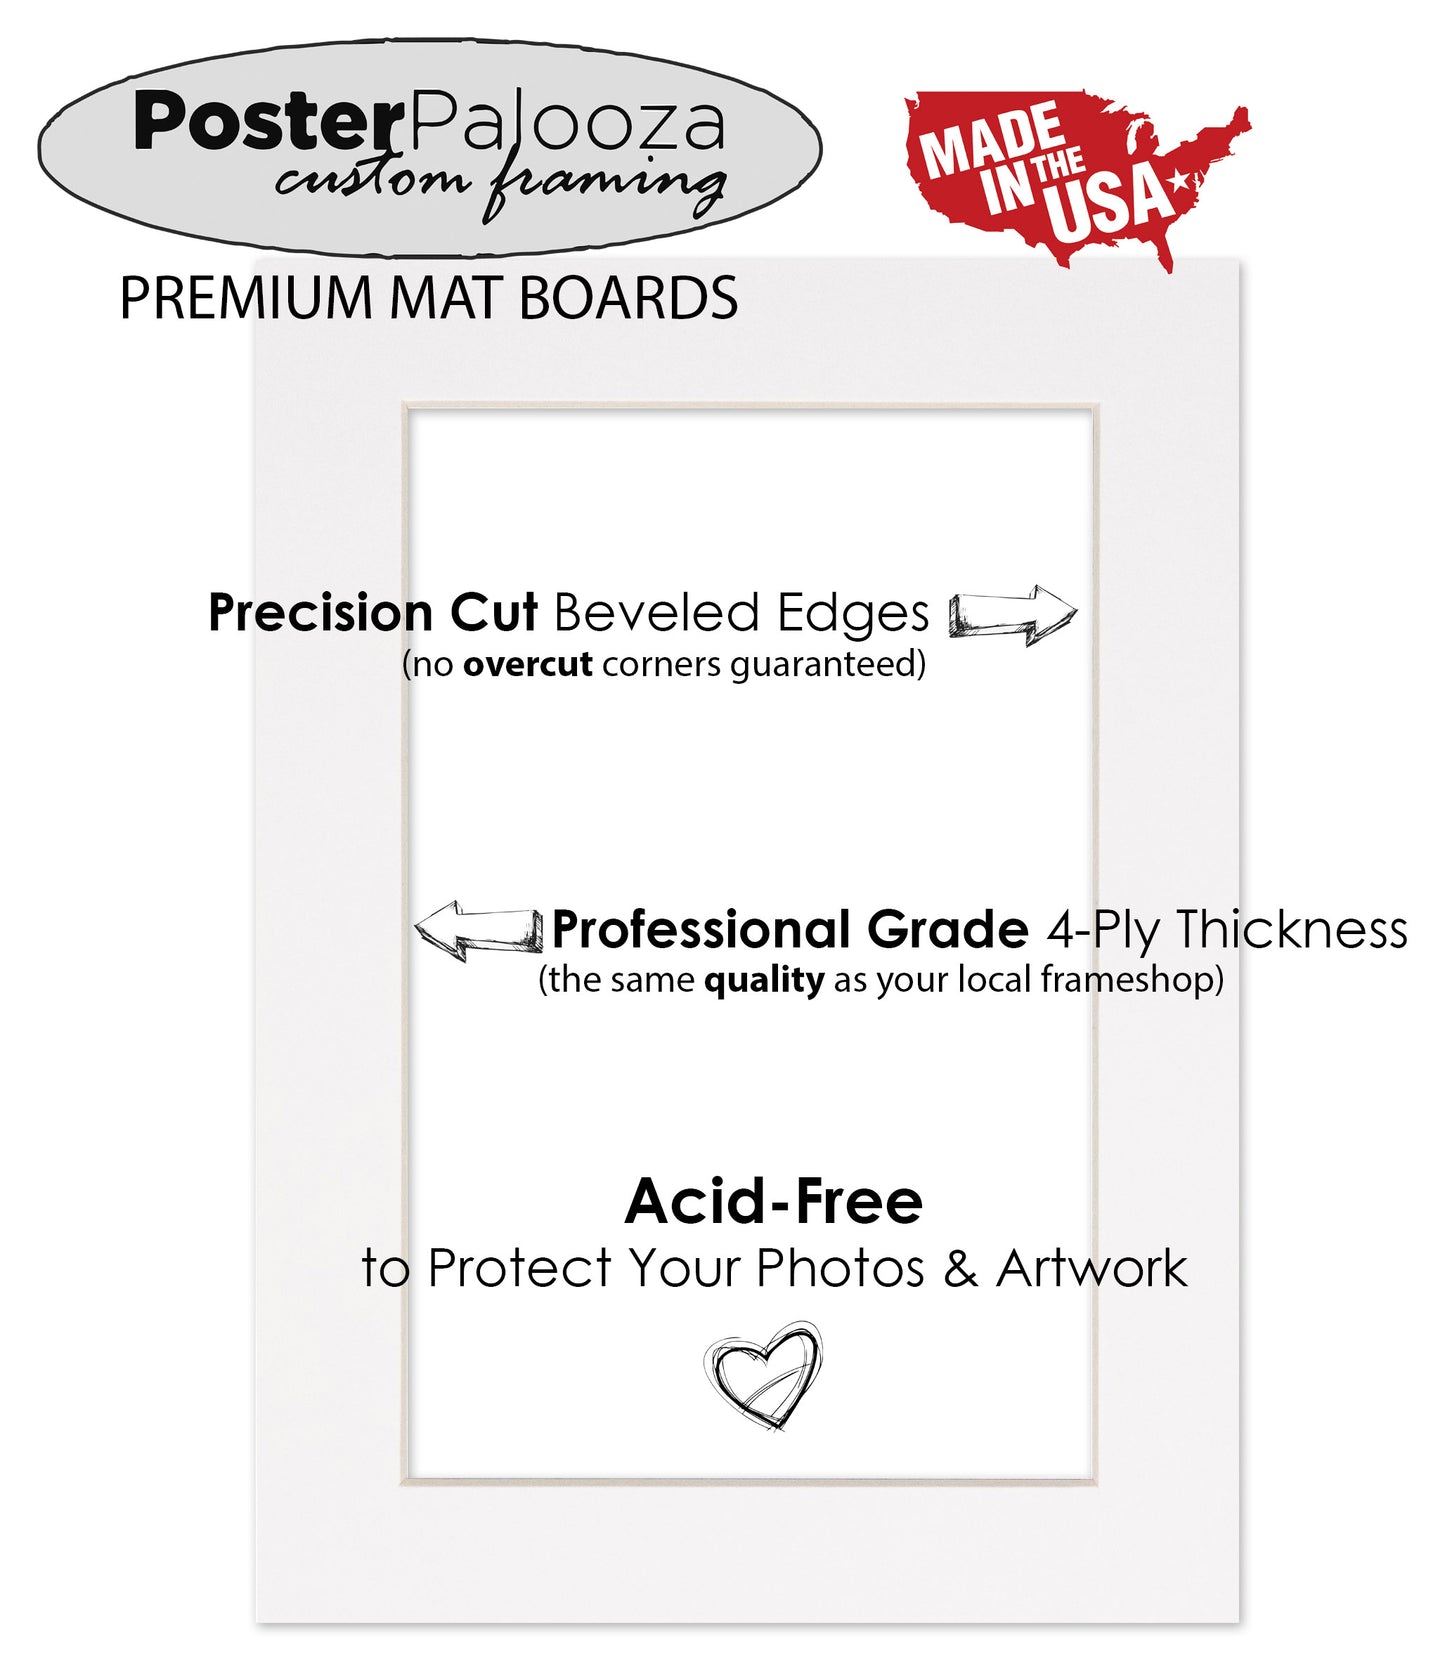 Pack of 10 Metallic Gold Precut Acid-Free Matboards